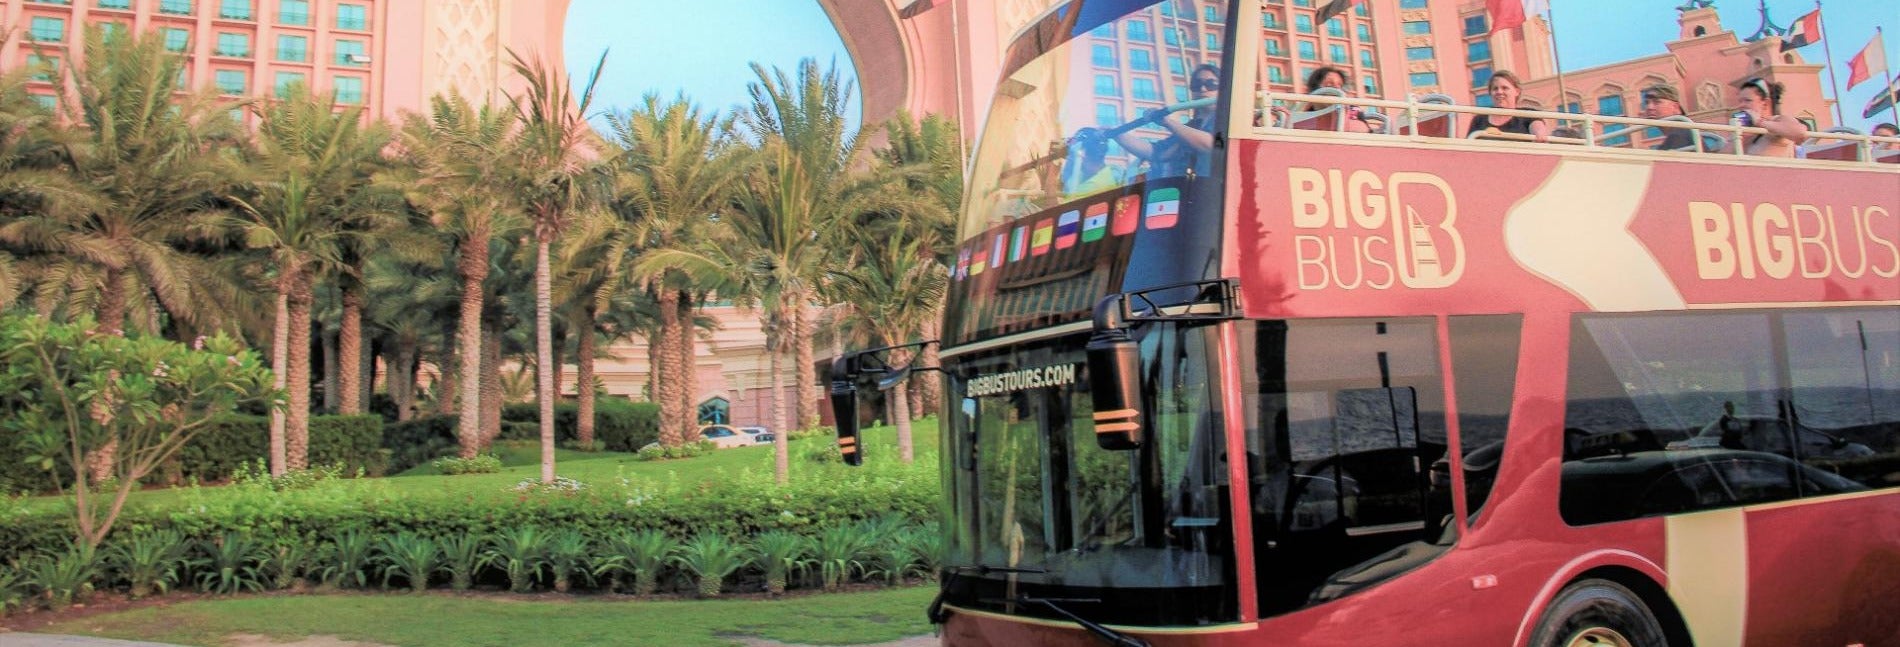 Ônibus turístico de Dubai, Big Bus